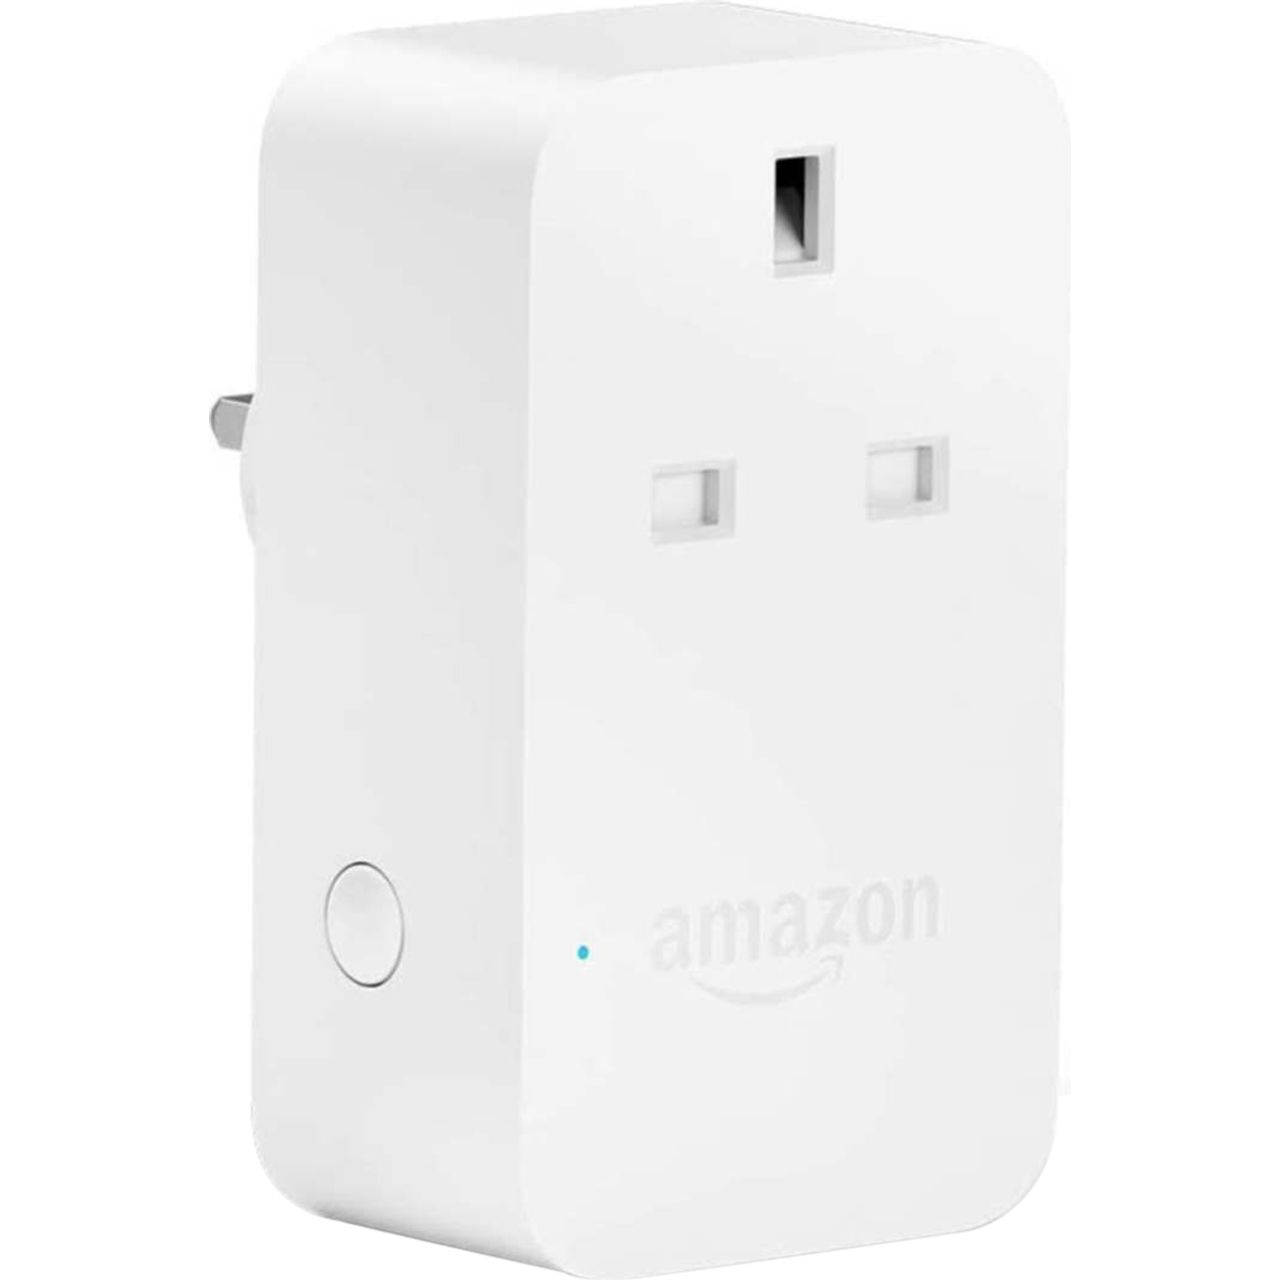 Amazon Echo Smart Plug With Alexa Review